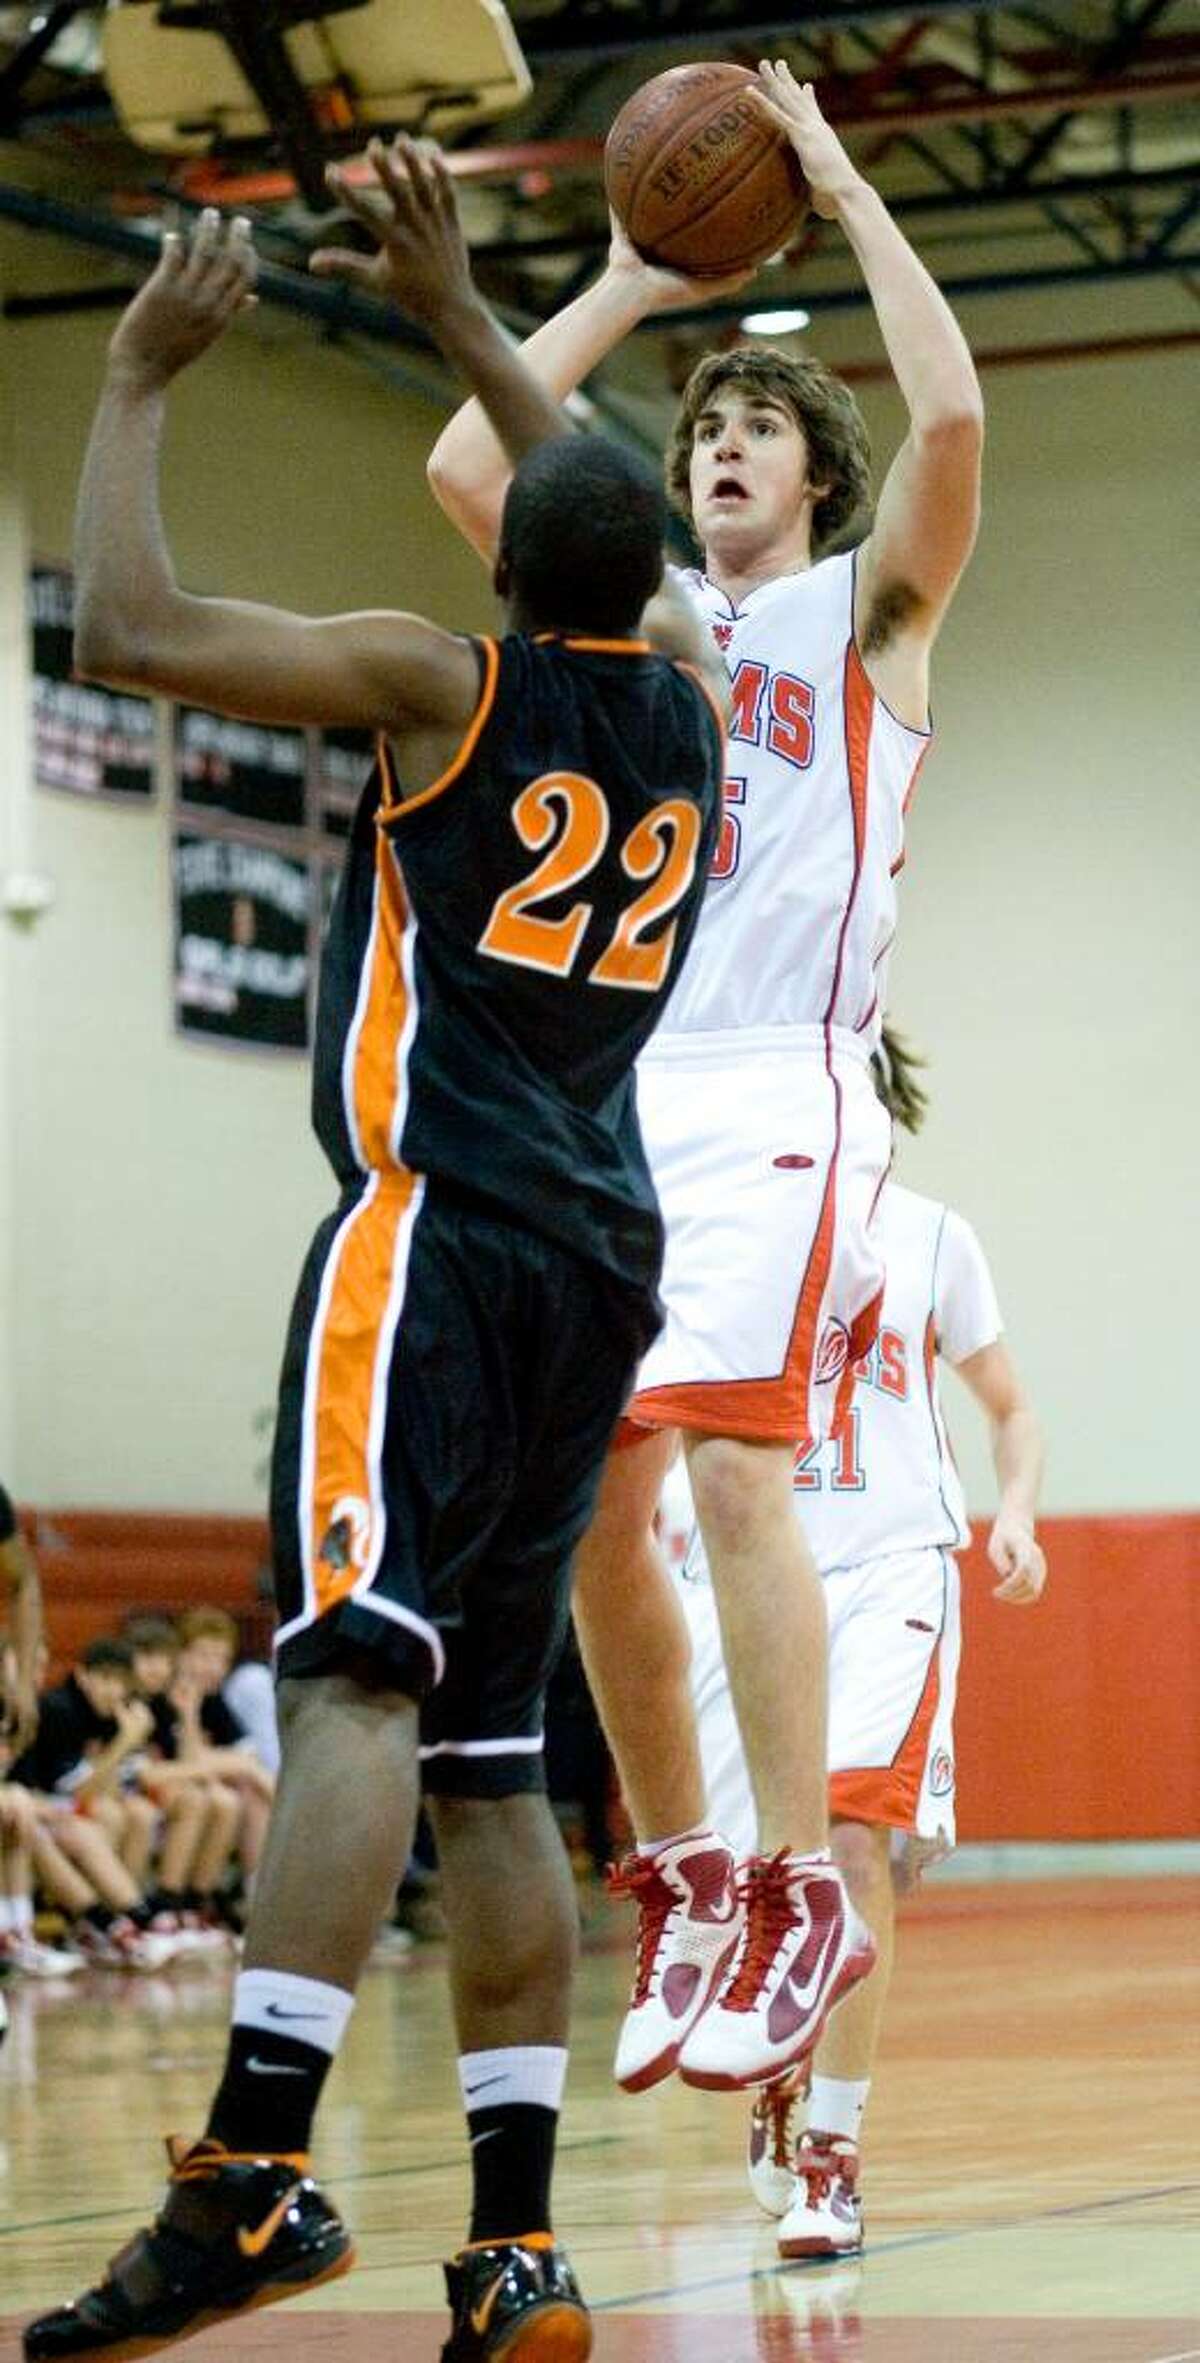 Stamford High School plays New Canaan High School in boys basketball in New Canaan.